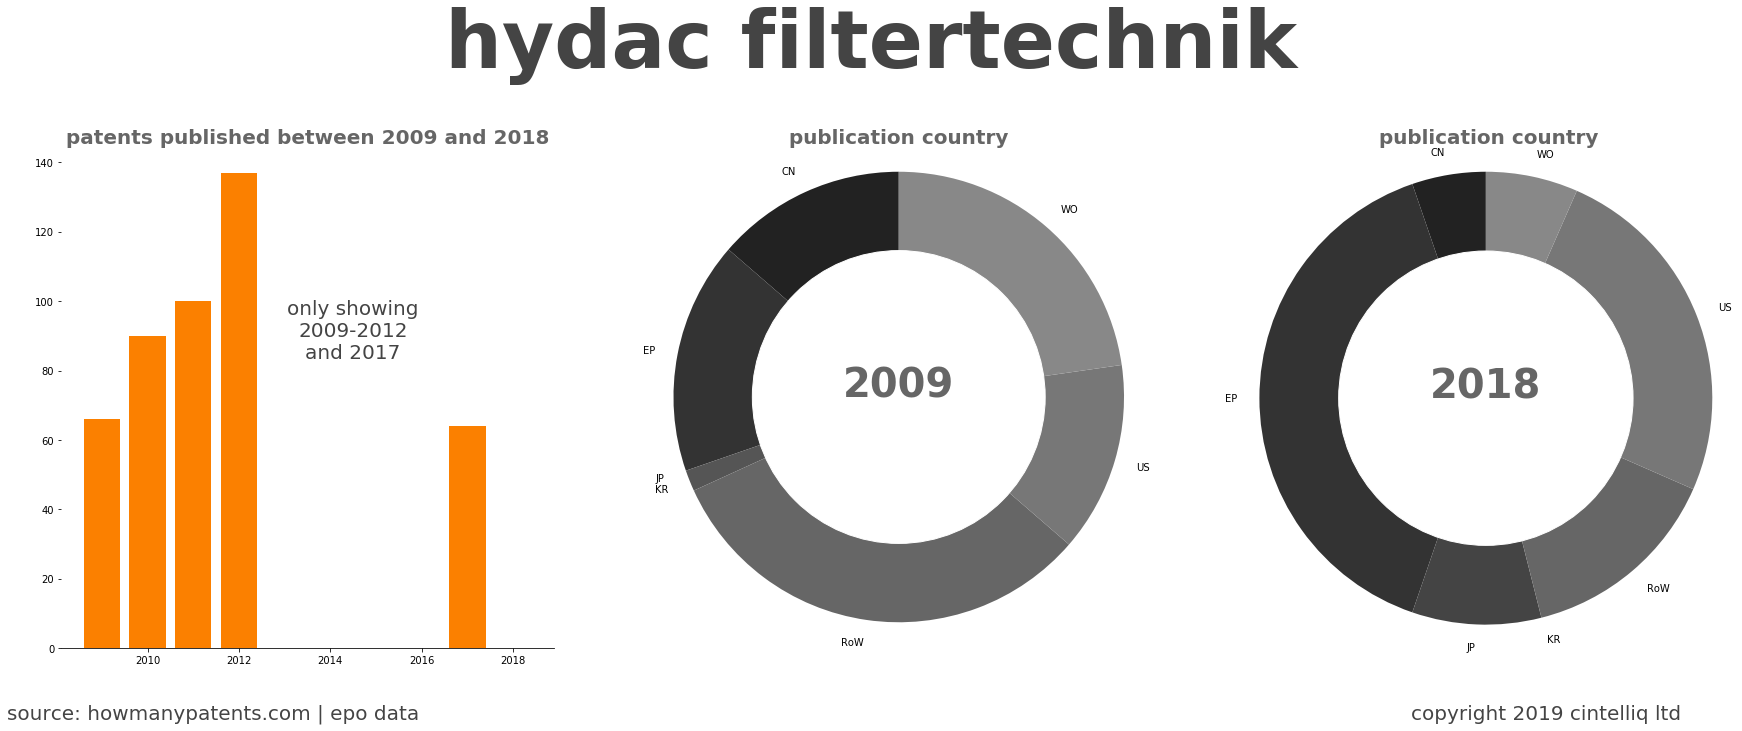 summary of patents for Hydac Filtertechnik